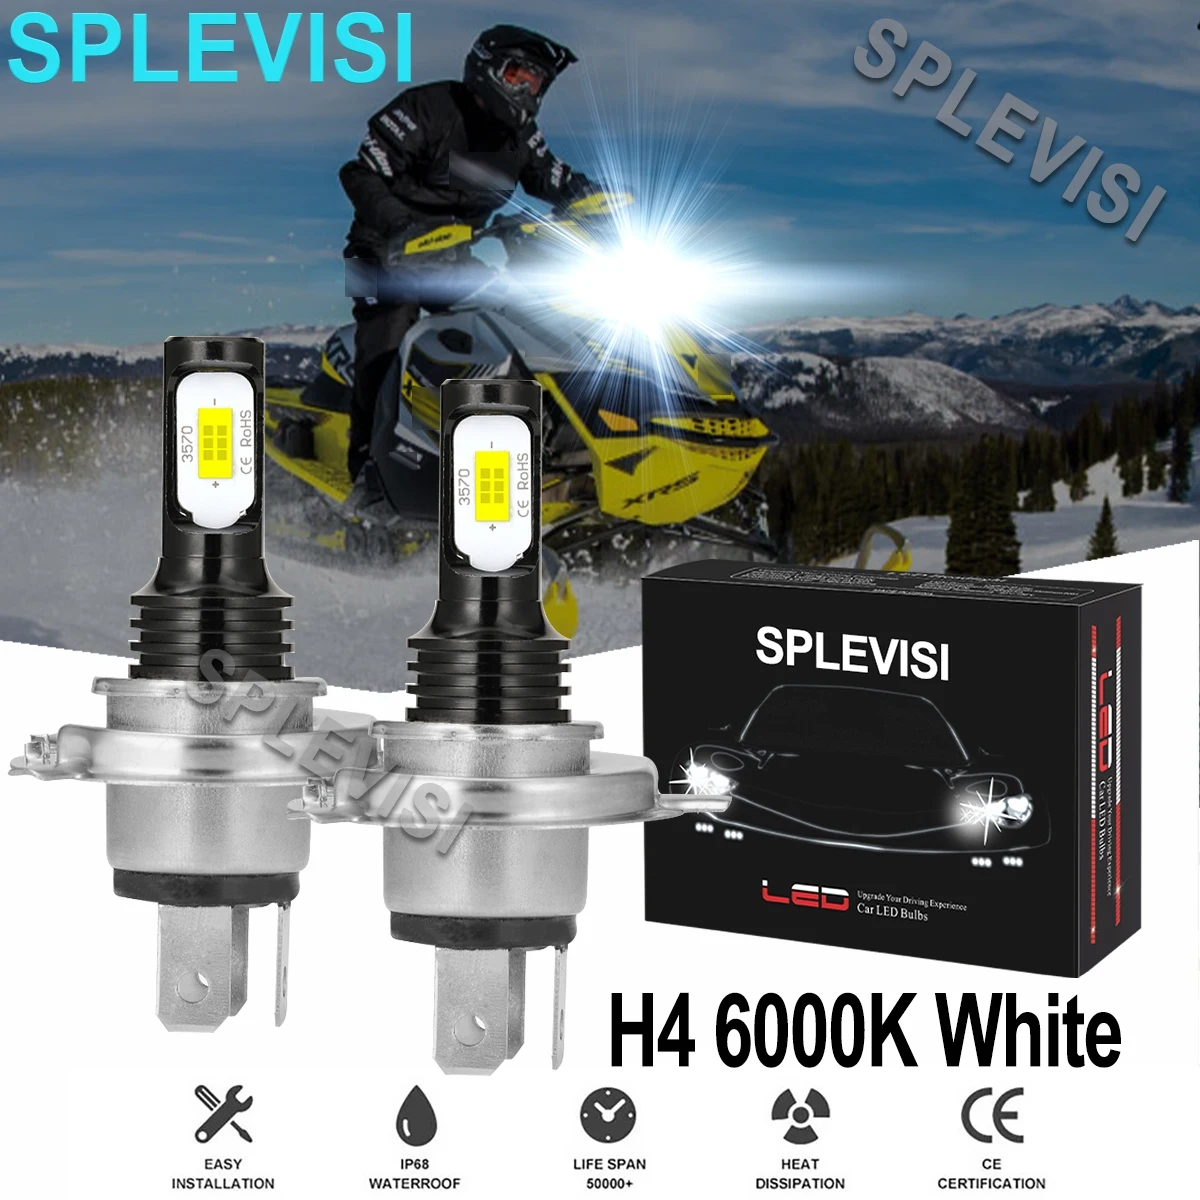 2x 70W White LED Headlights For Ski-Doo Renegade X 600 800R 1200 XRS 800R Snowmobile